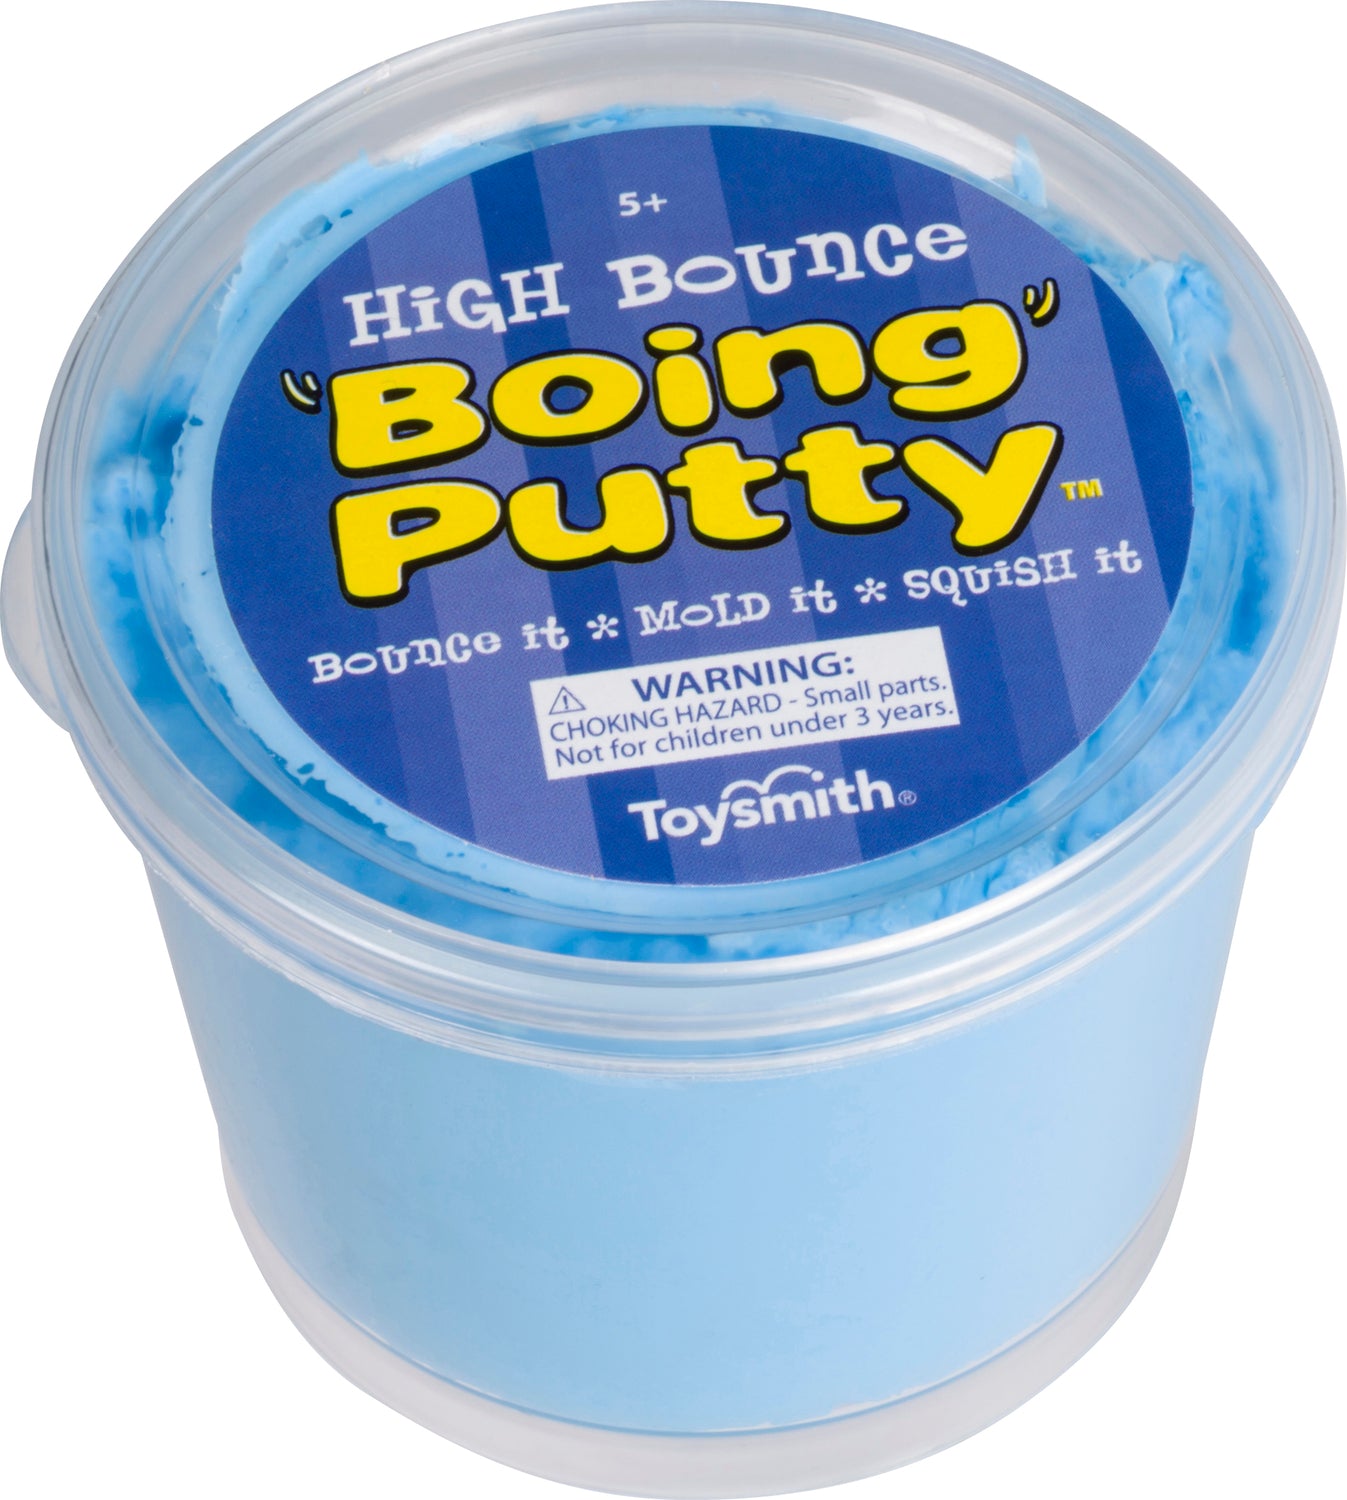 Hi-bounce Boing Putty 